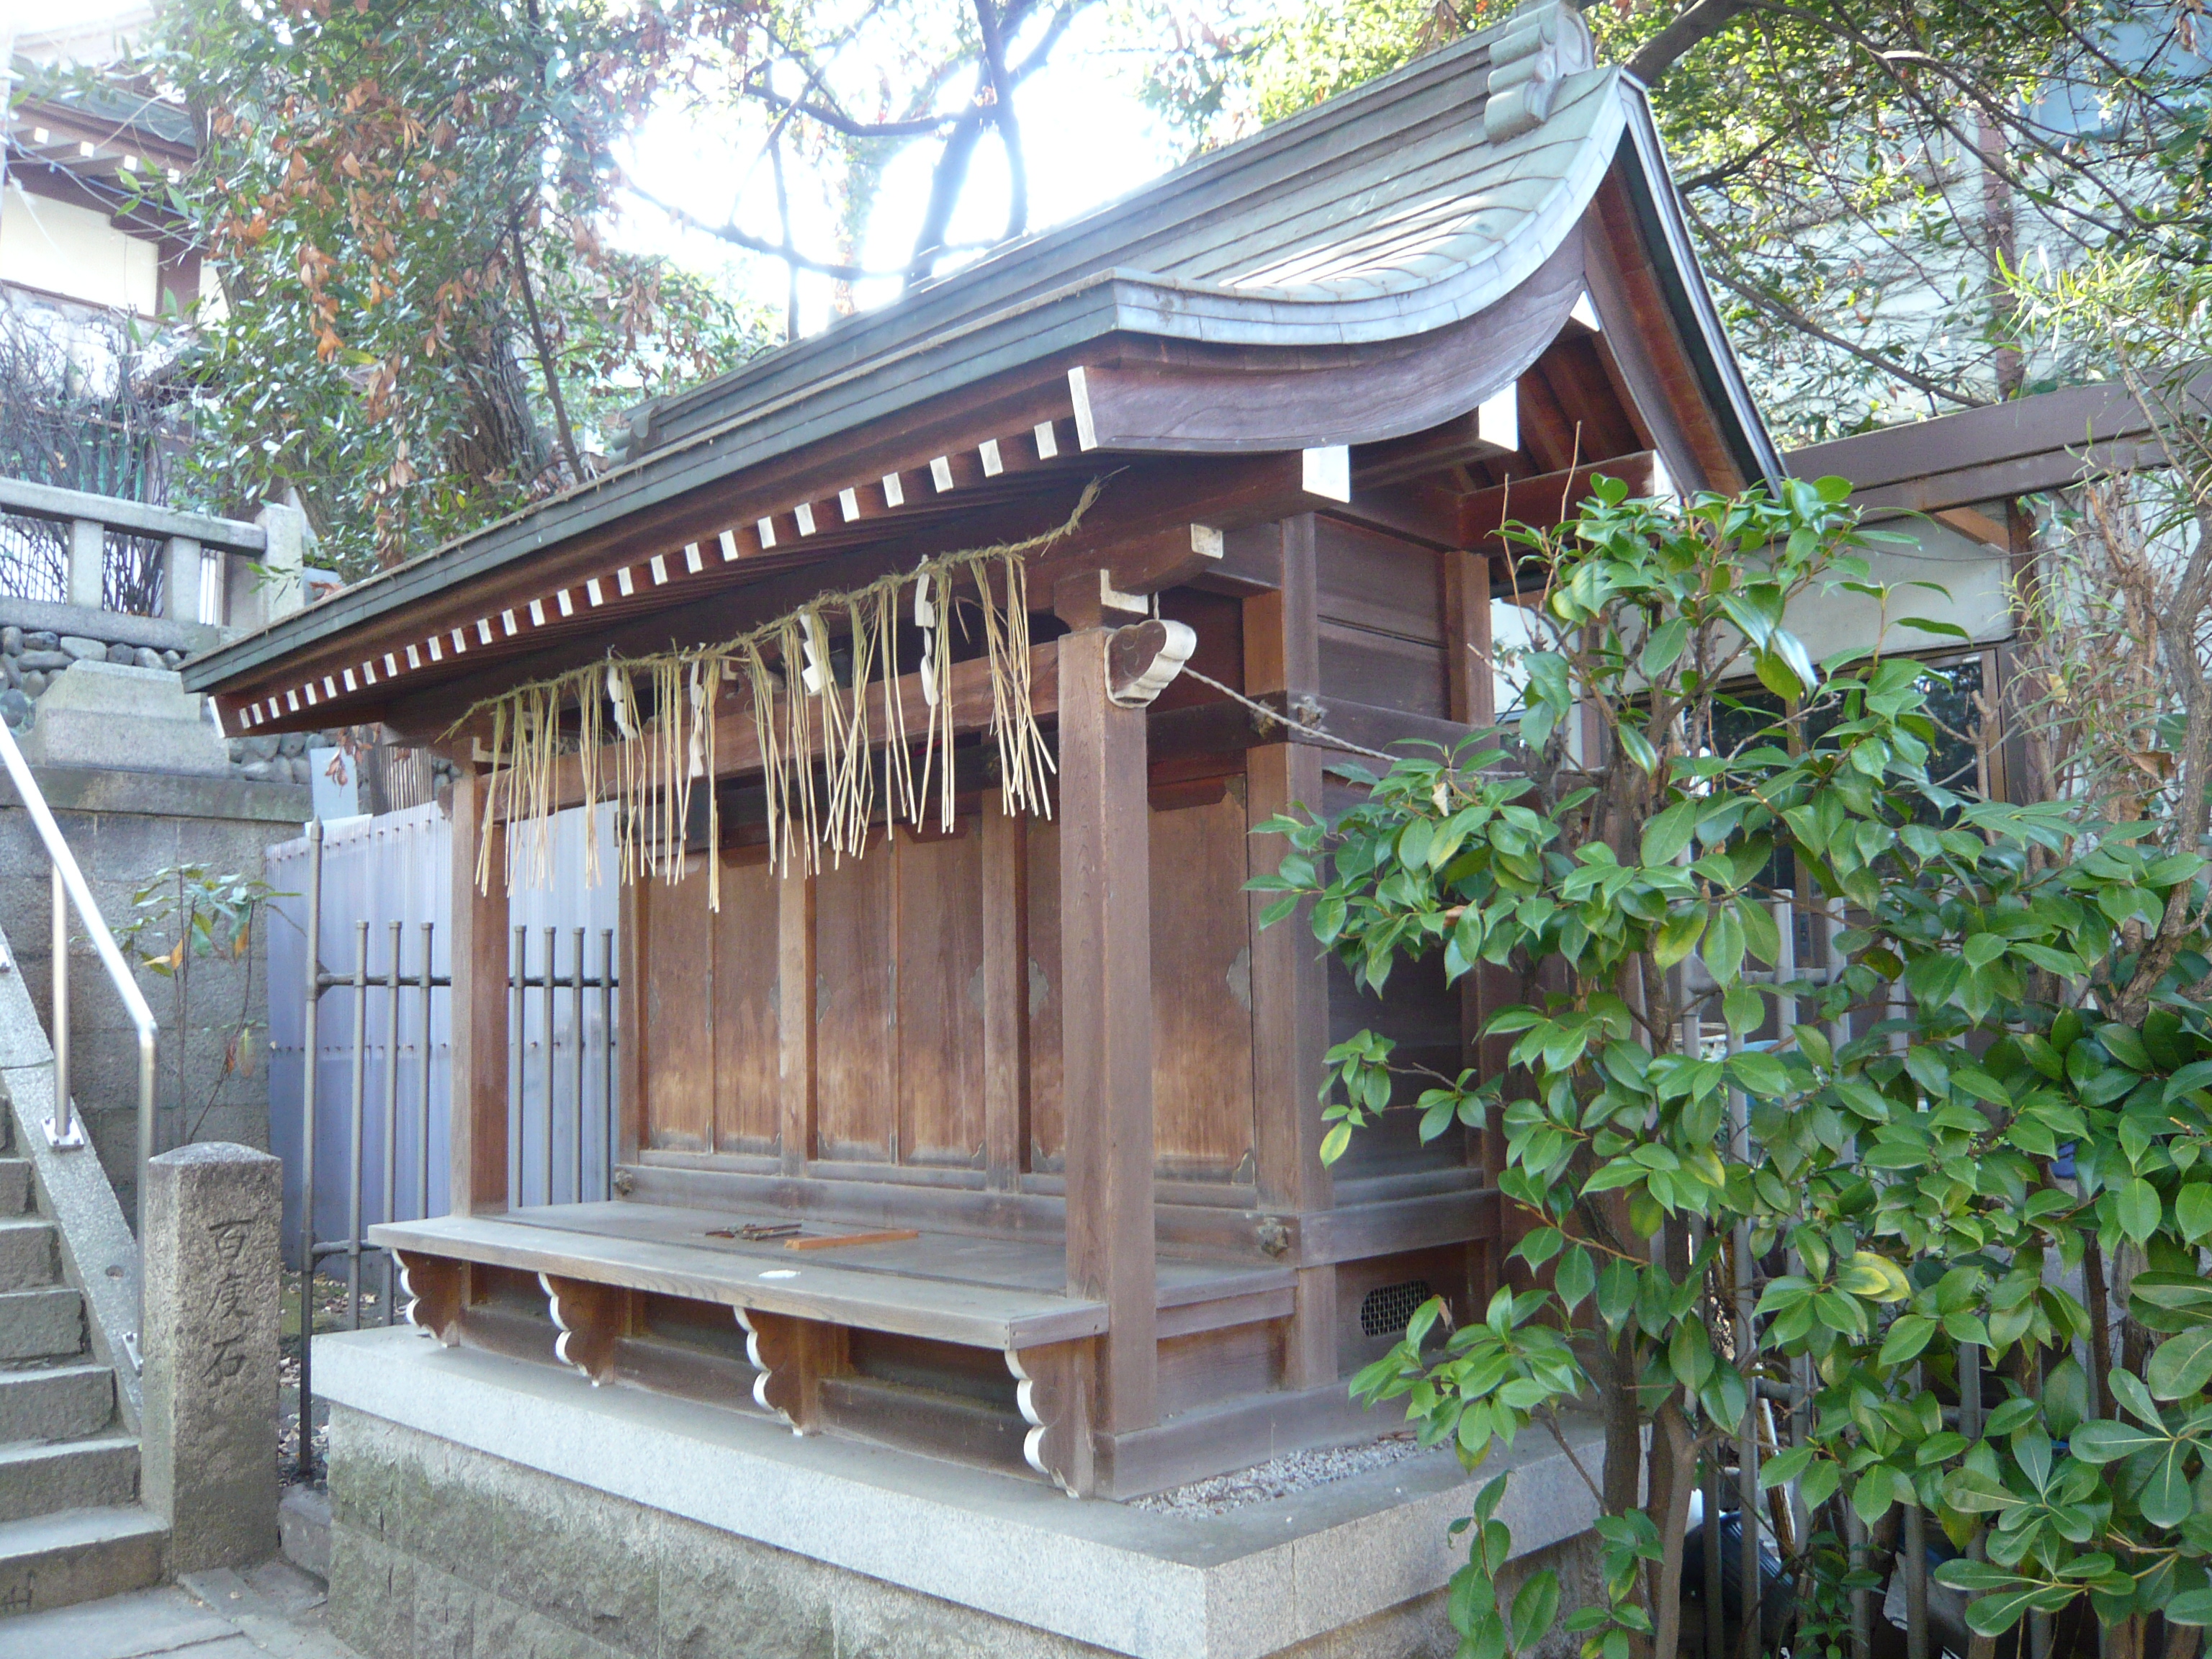 shintoism shrine